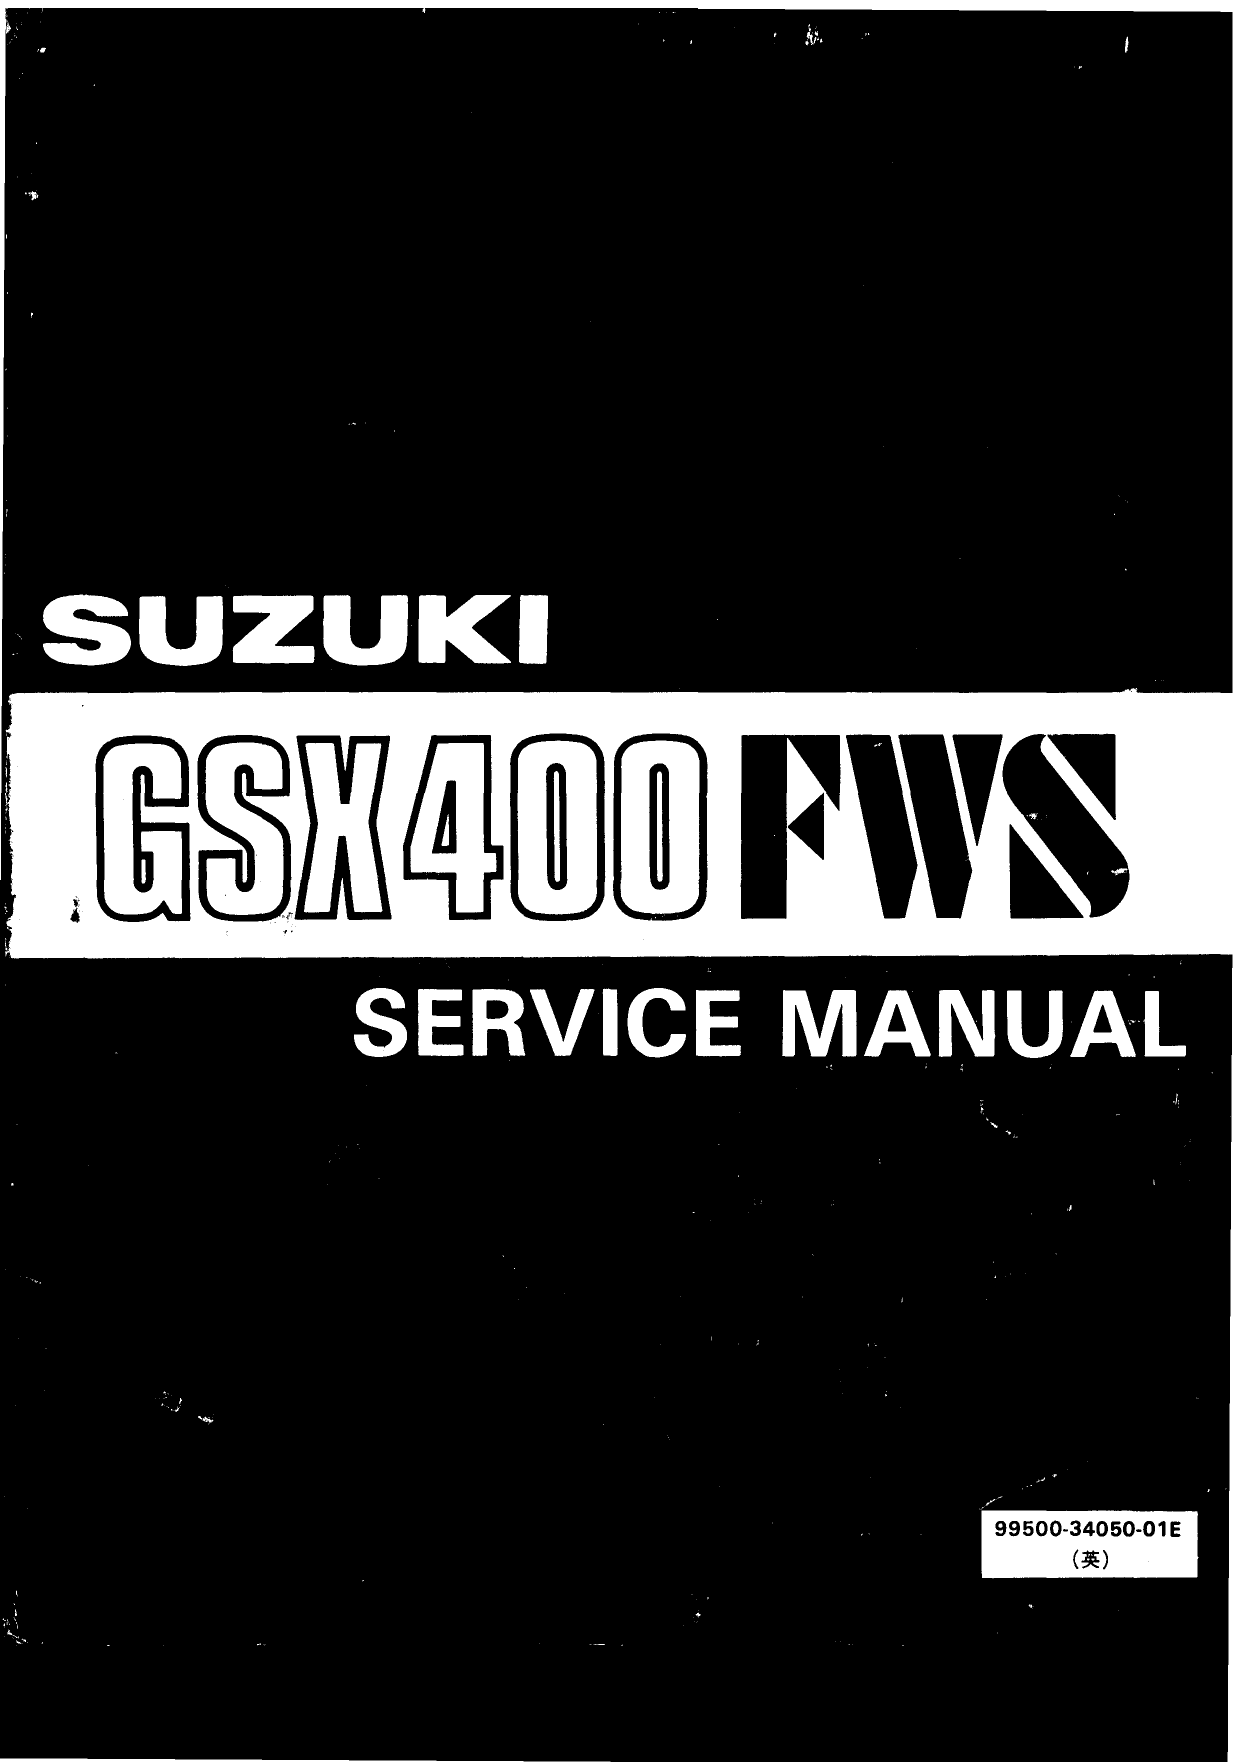 1983-1984 Suzuki GSX400FWS, GSX400FW, GSX400 service manual Preview image 6